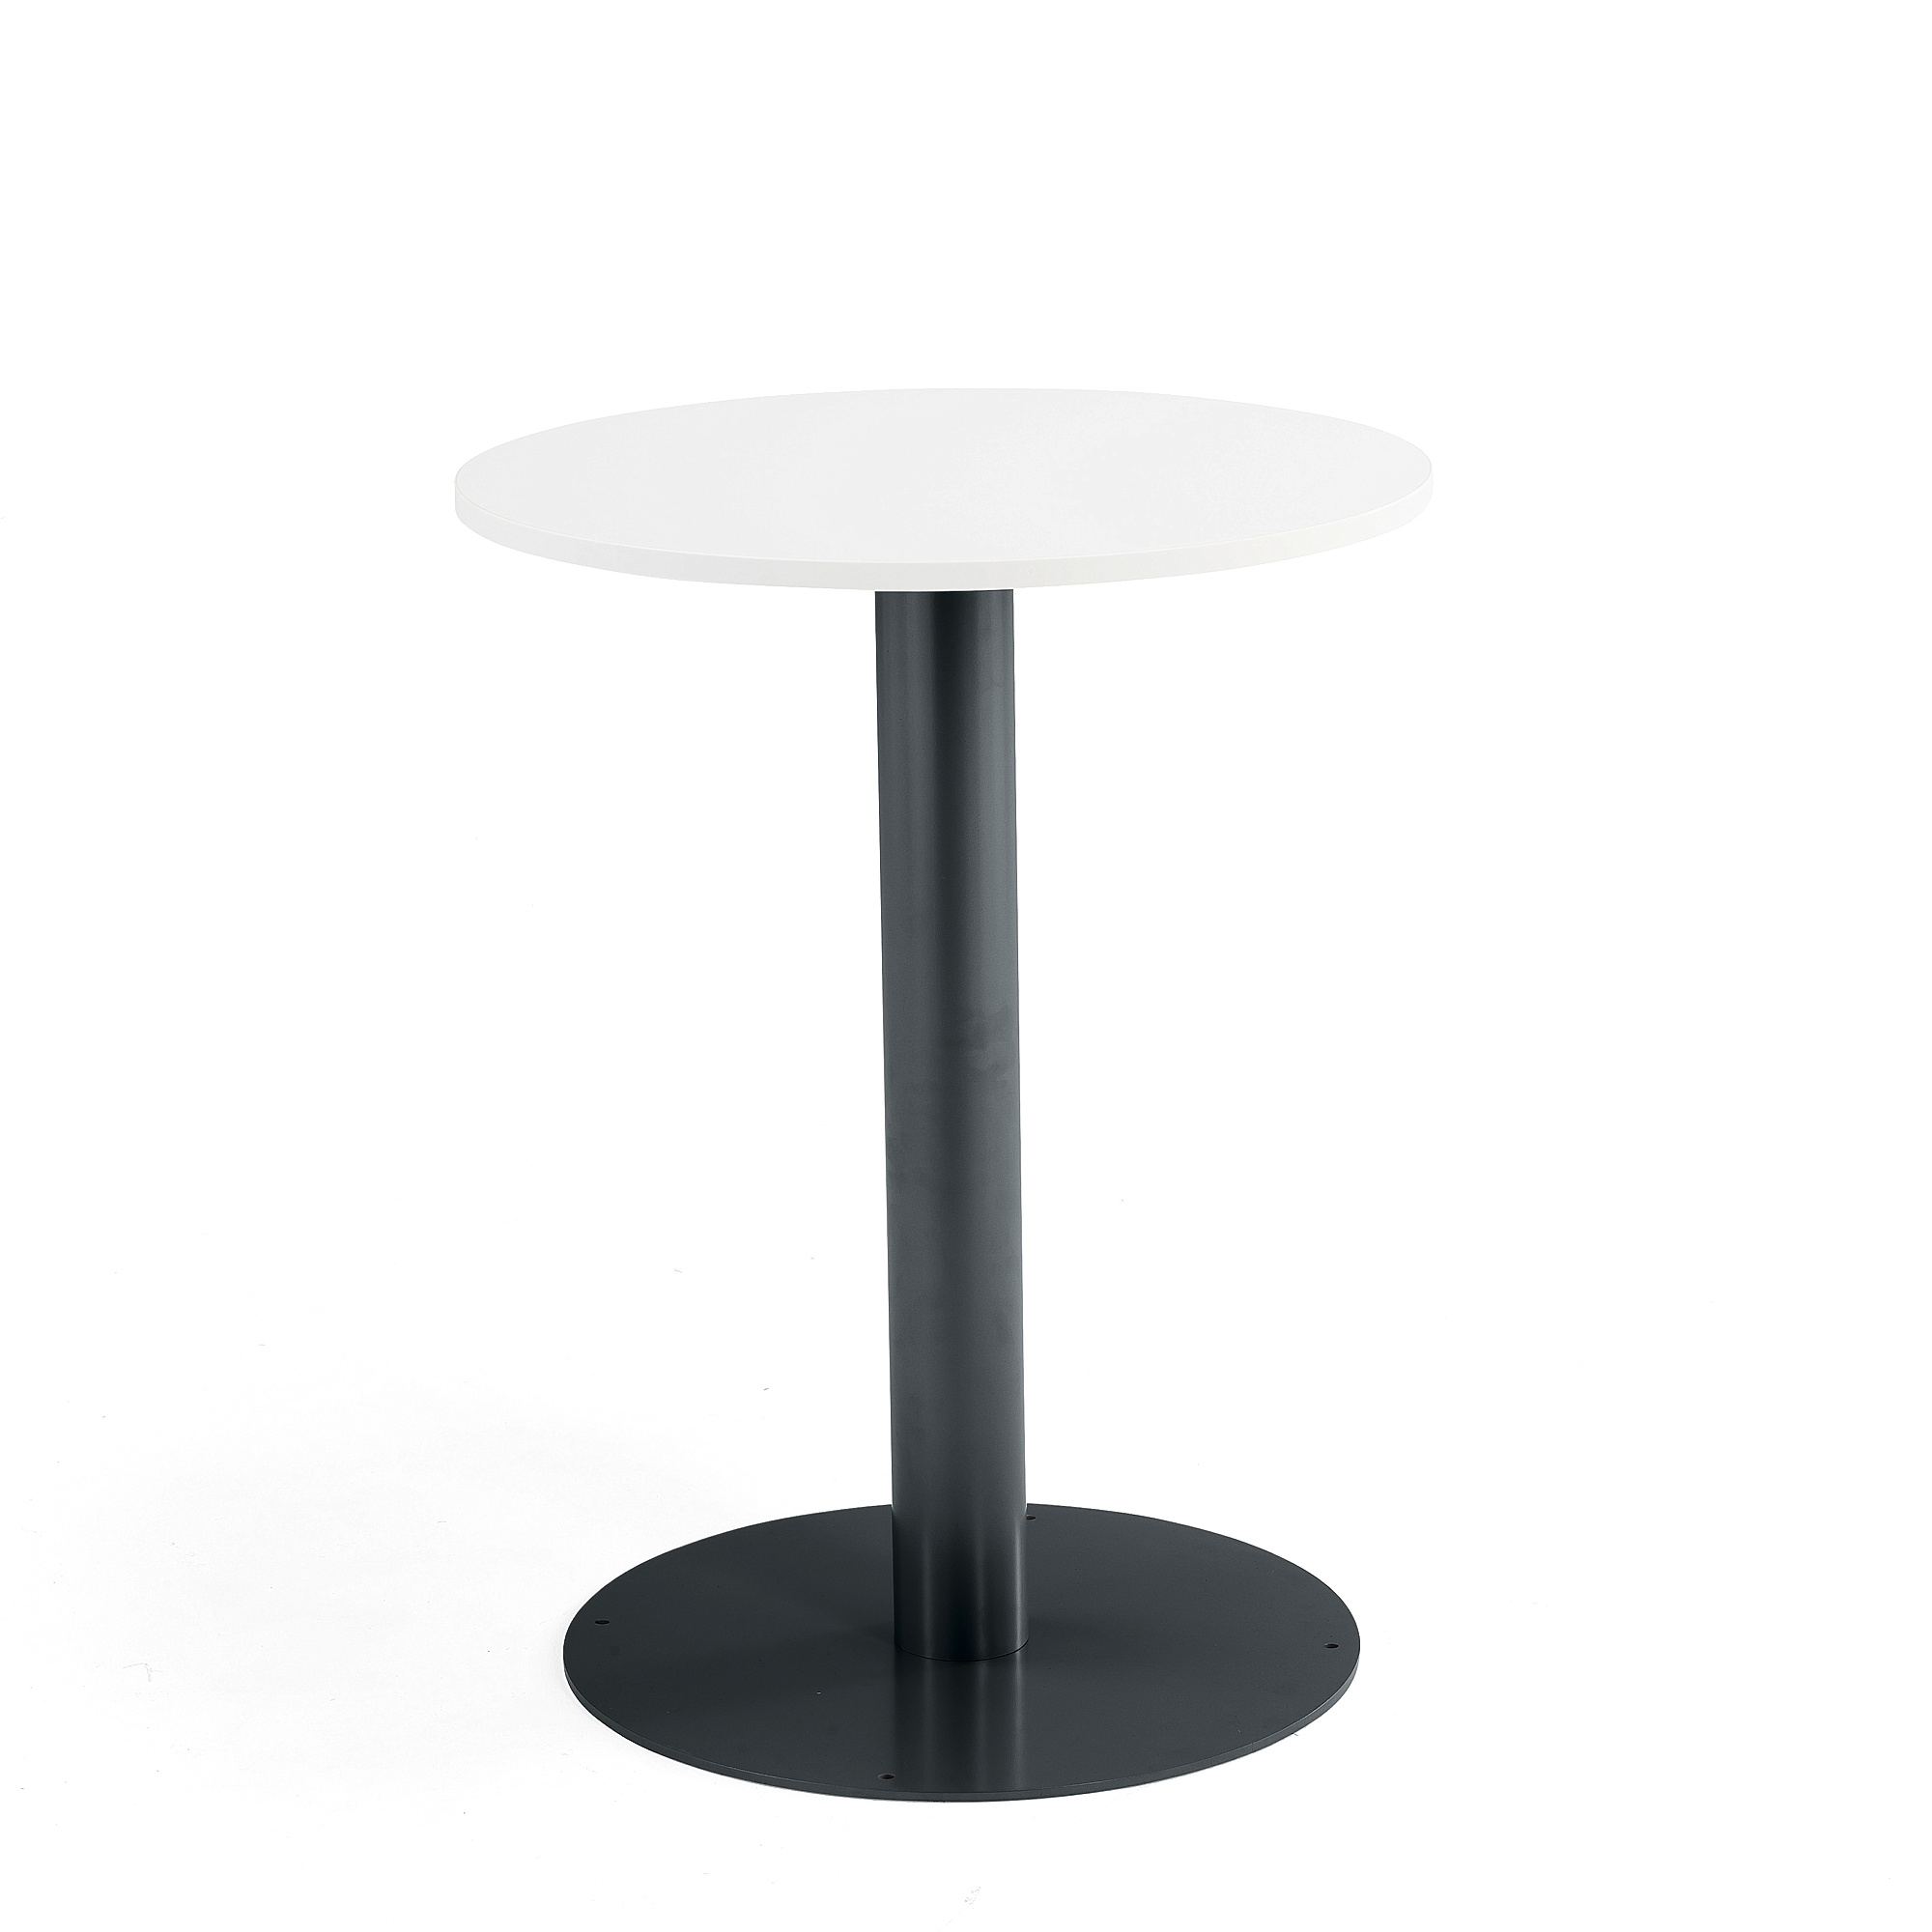 Kulatý stůl Alva, Ø700x900 mm, bílá, antracitově šedá